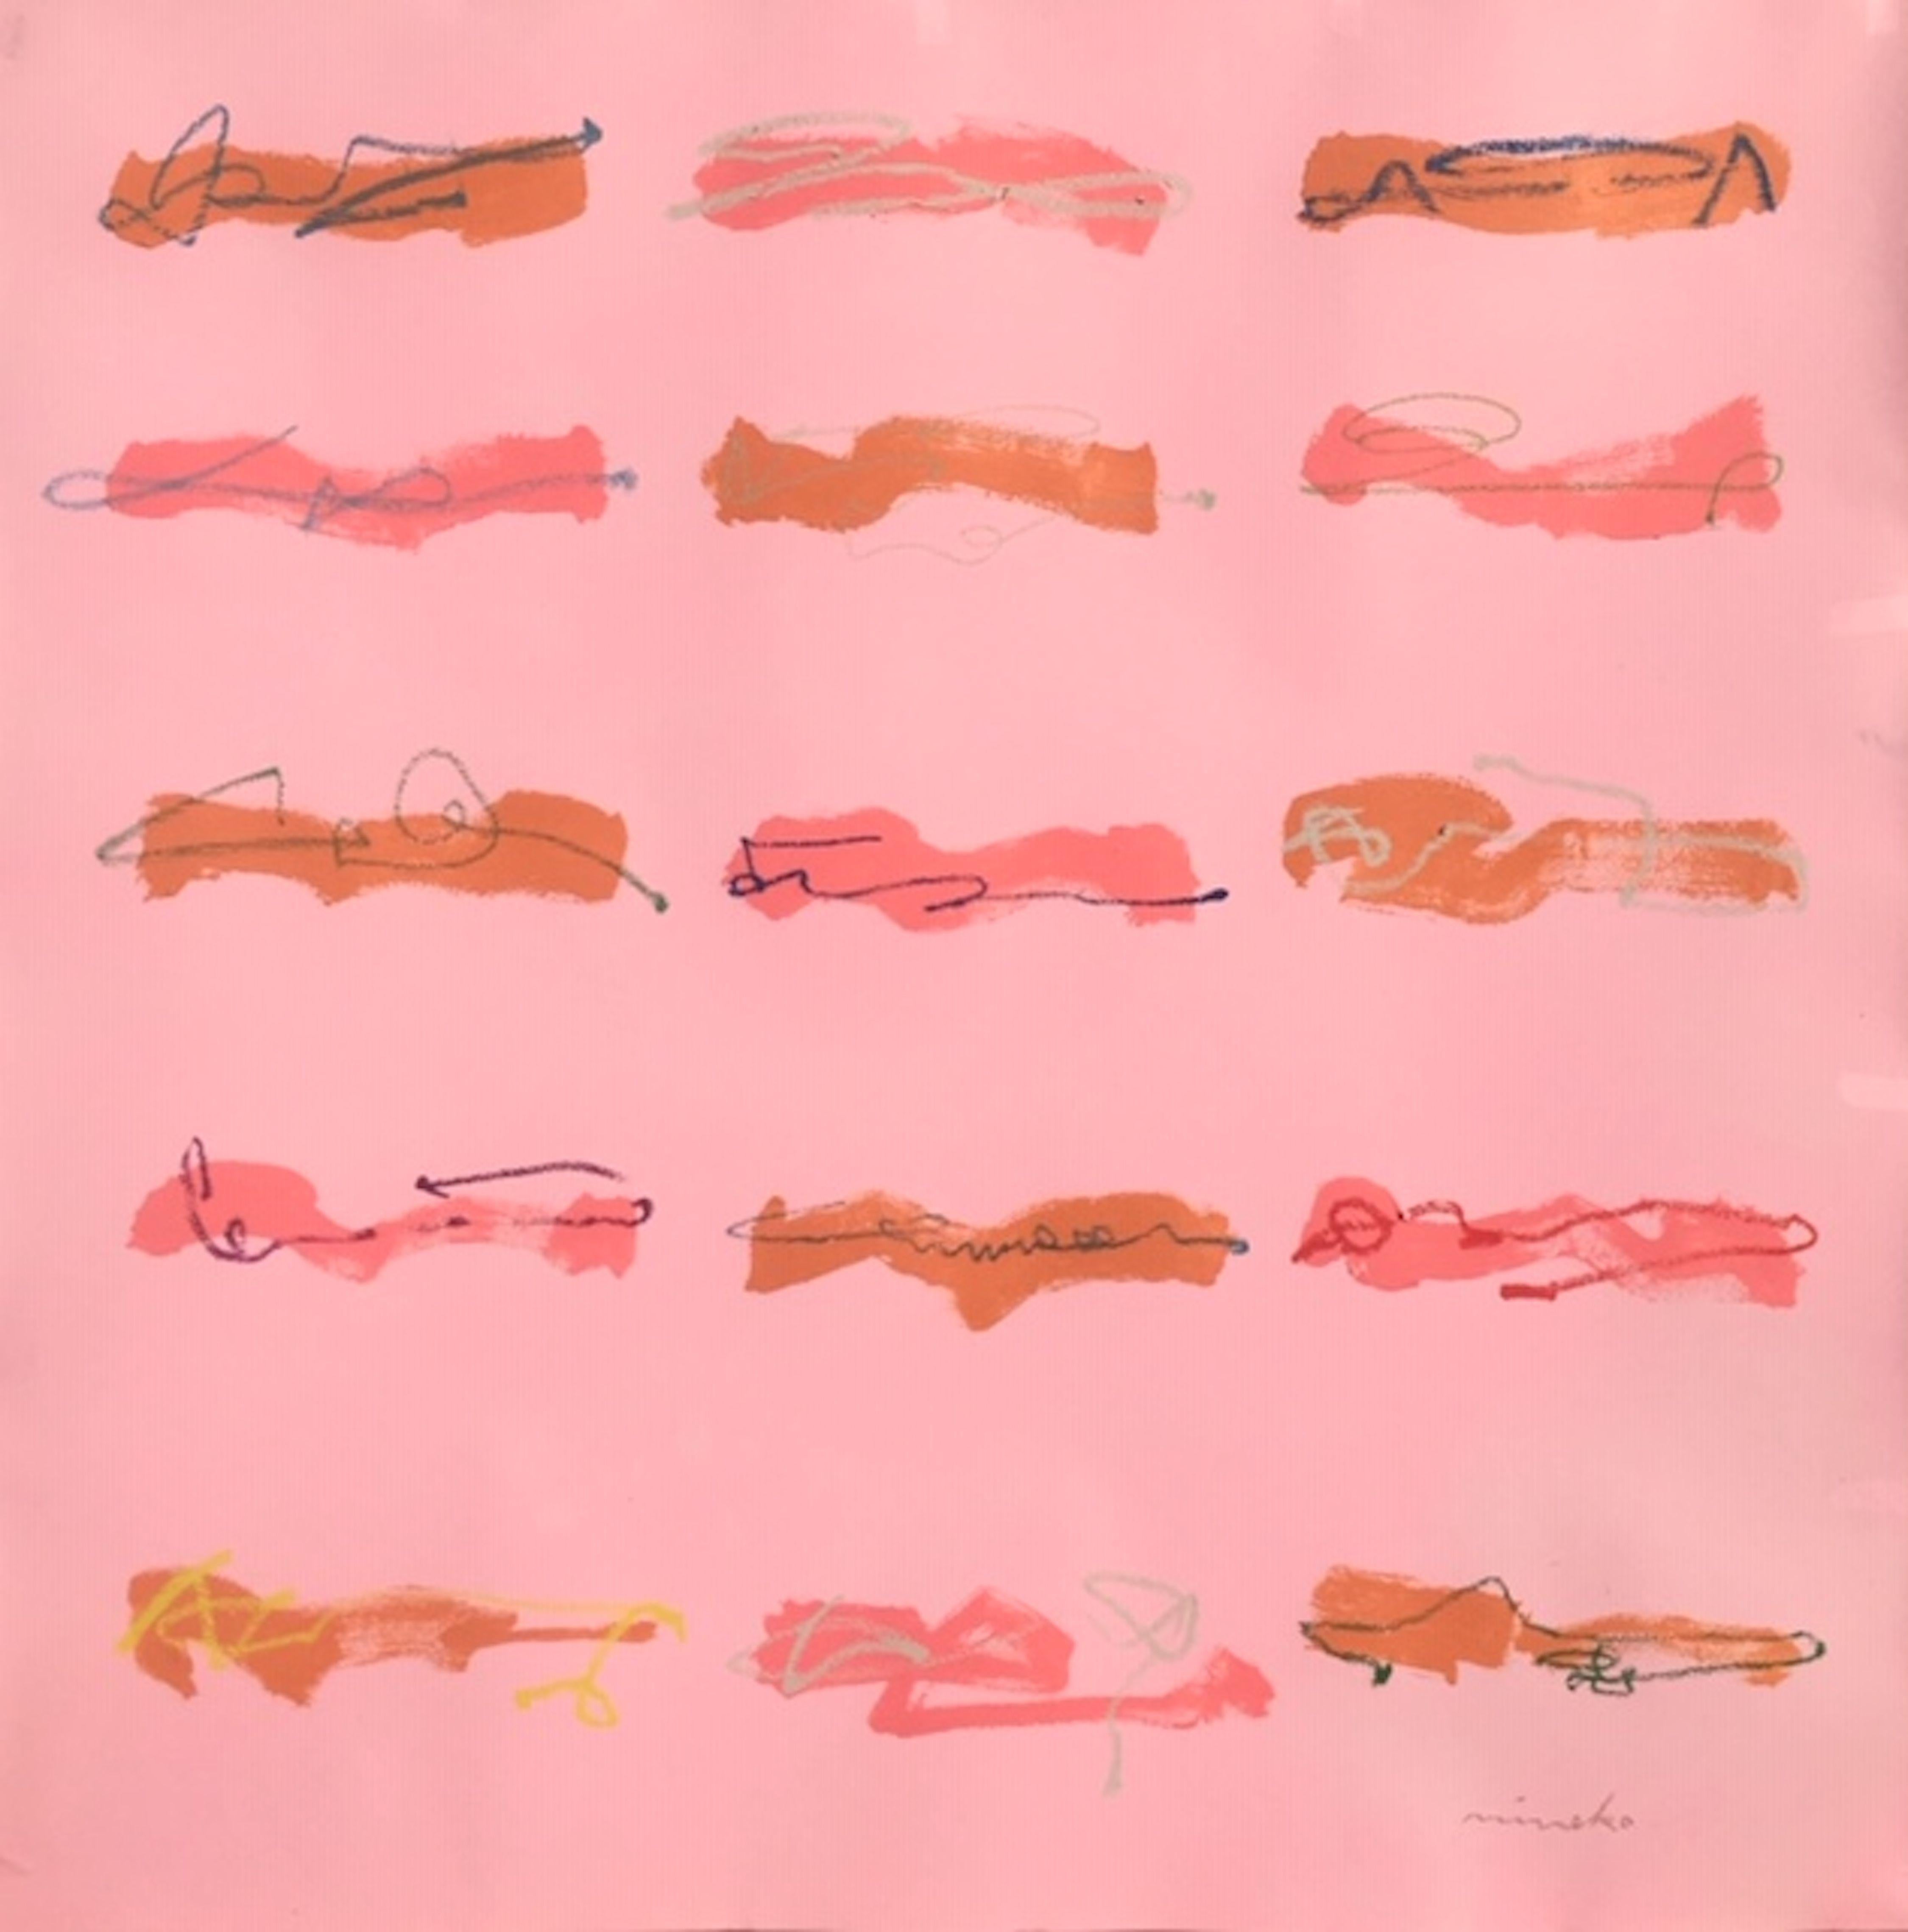 Line Drawing on Pink, Mixed Media on Paper - Mixed Media Art by Mineko Yoshida